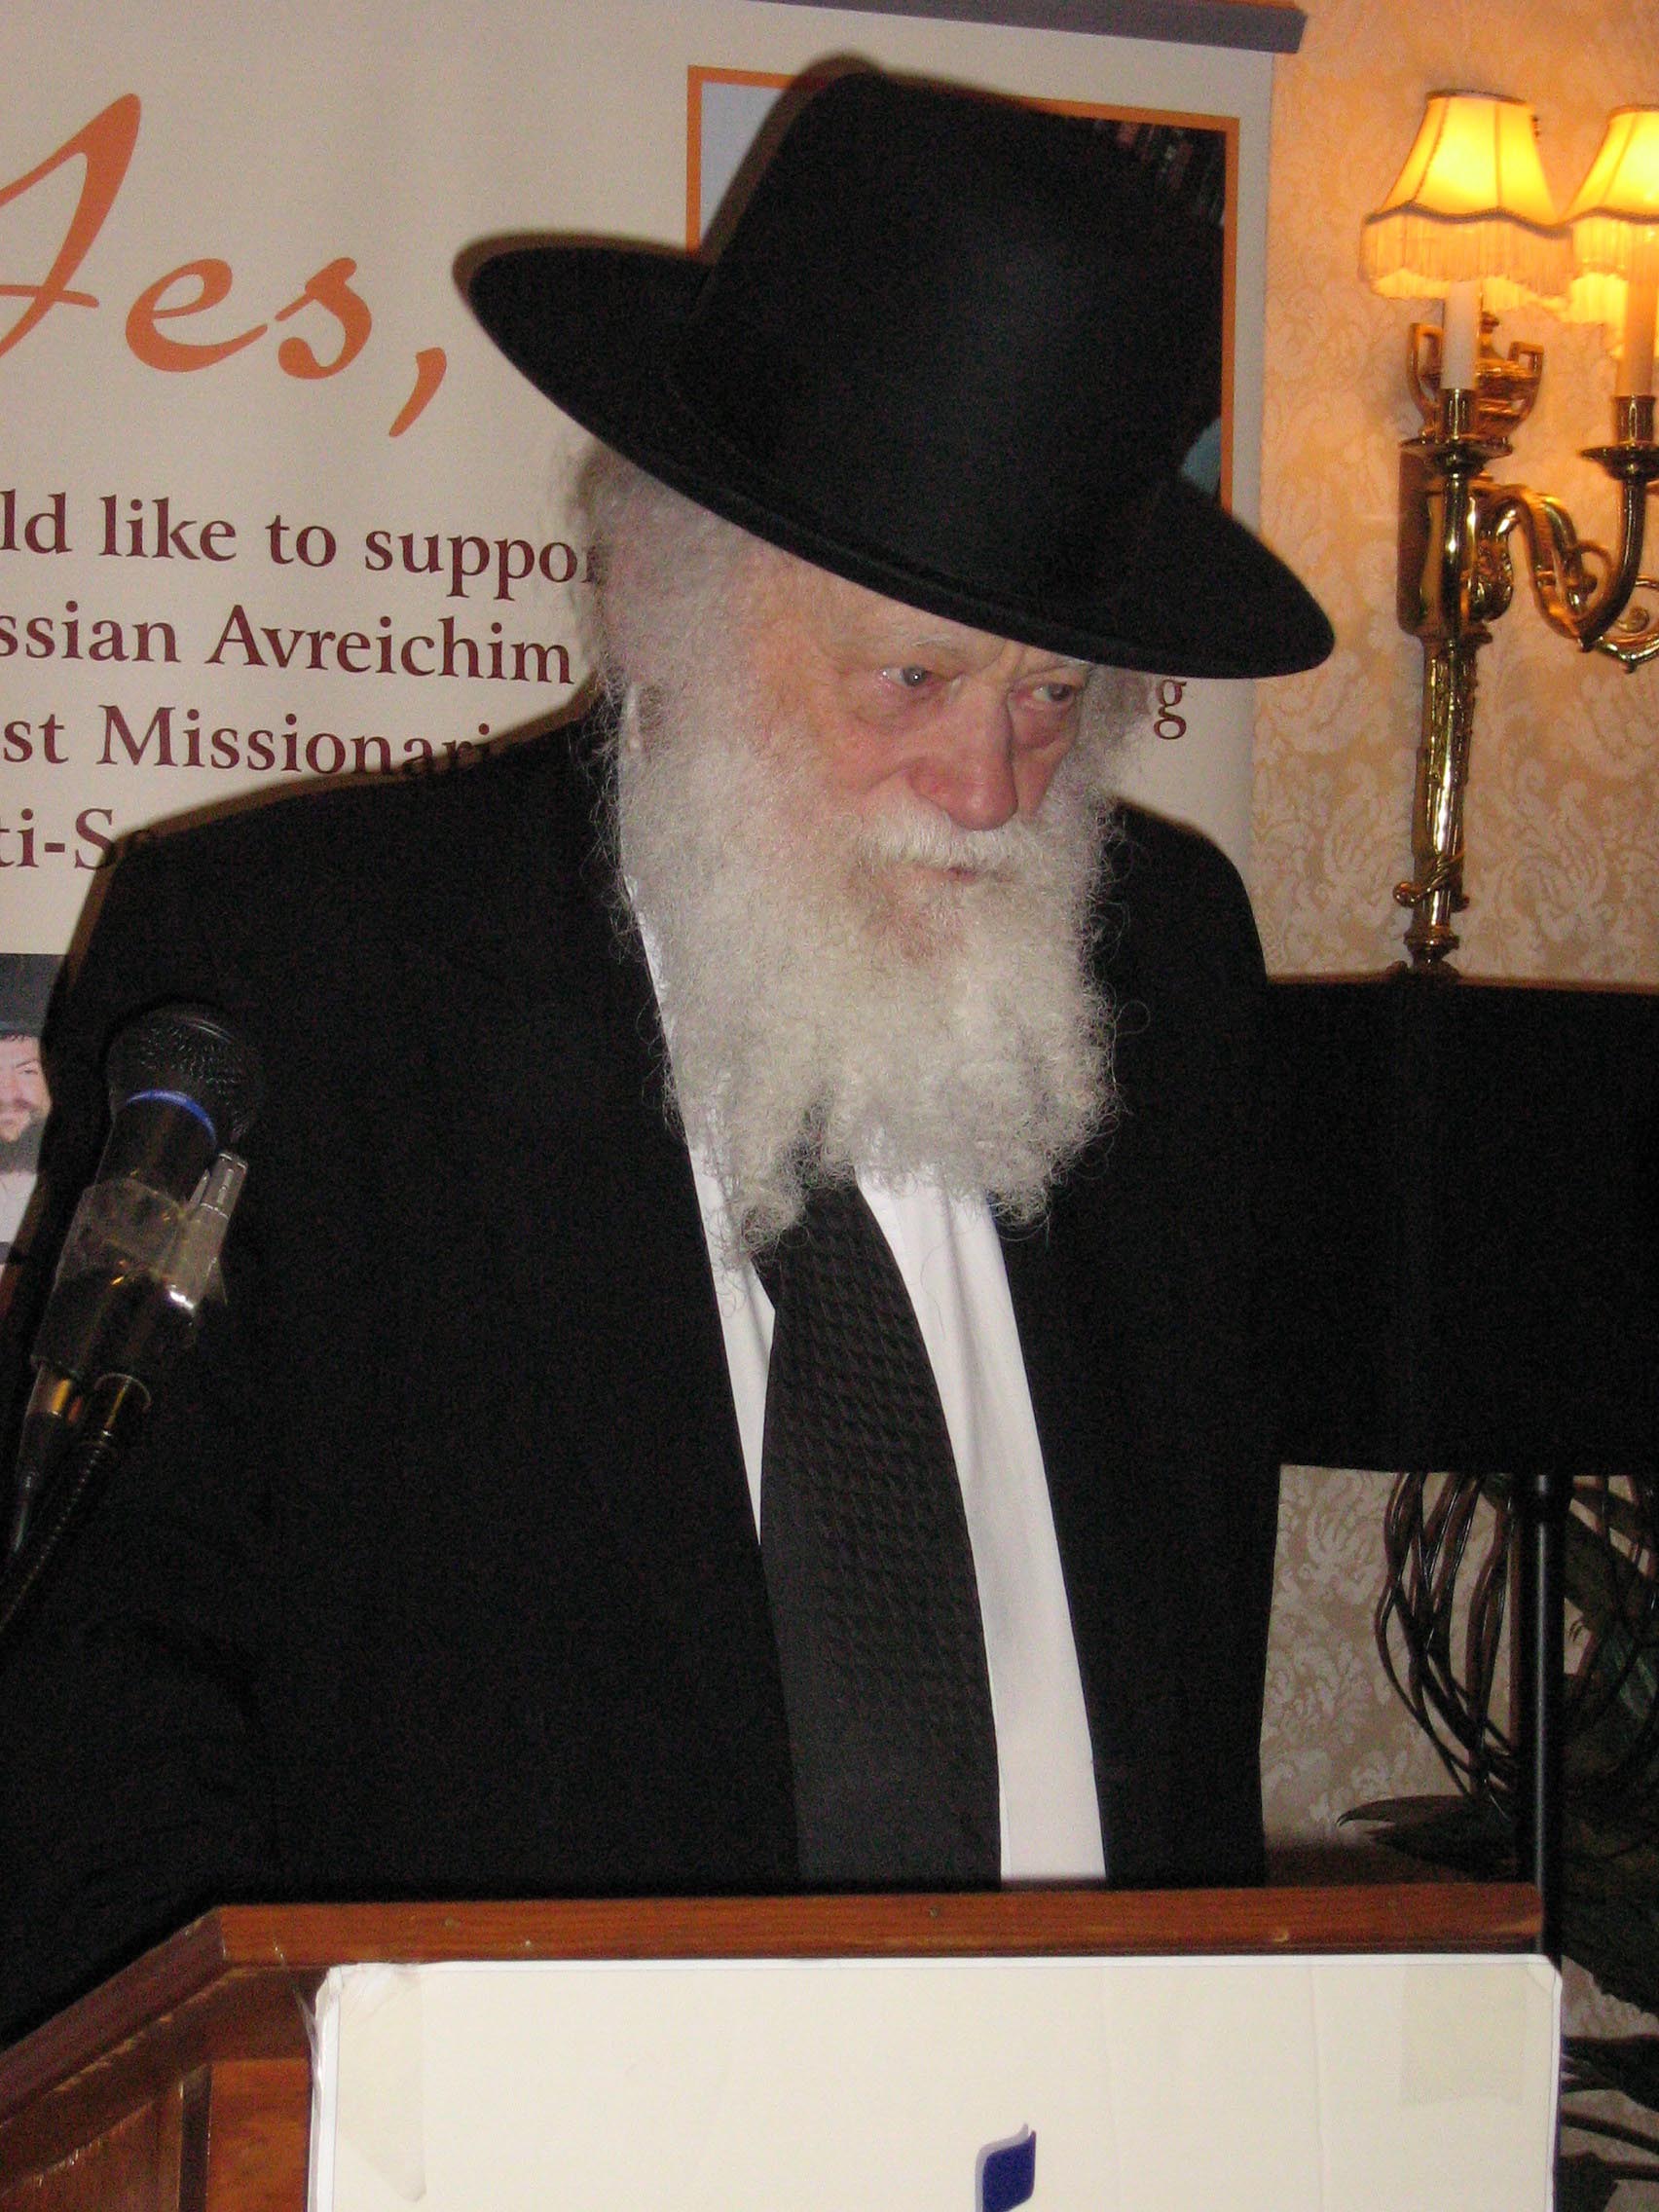 Rabbi Berenbaum